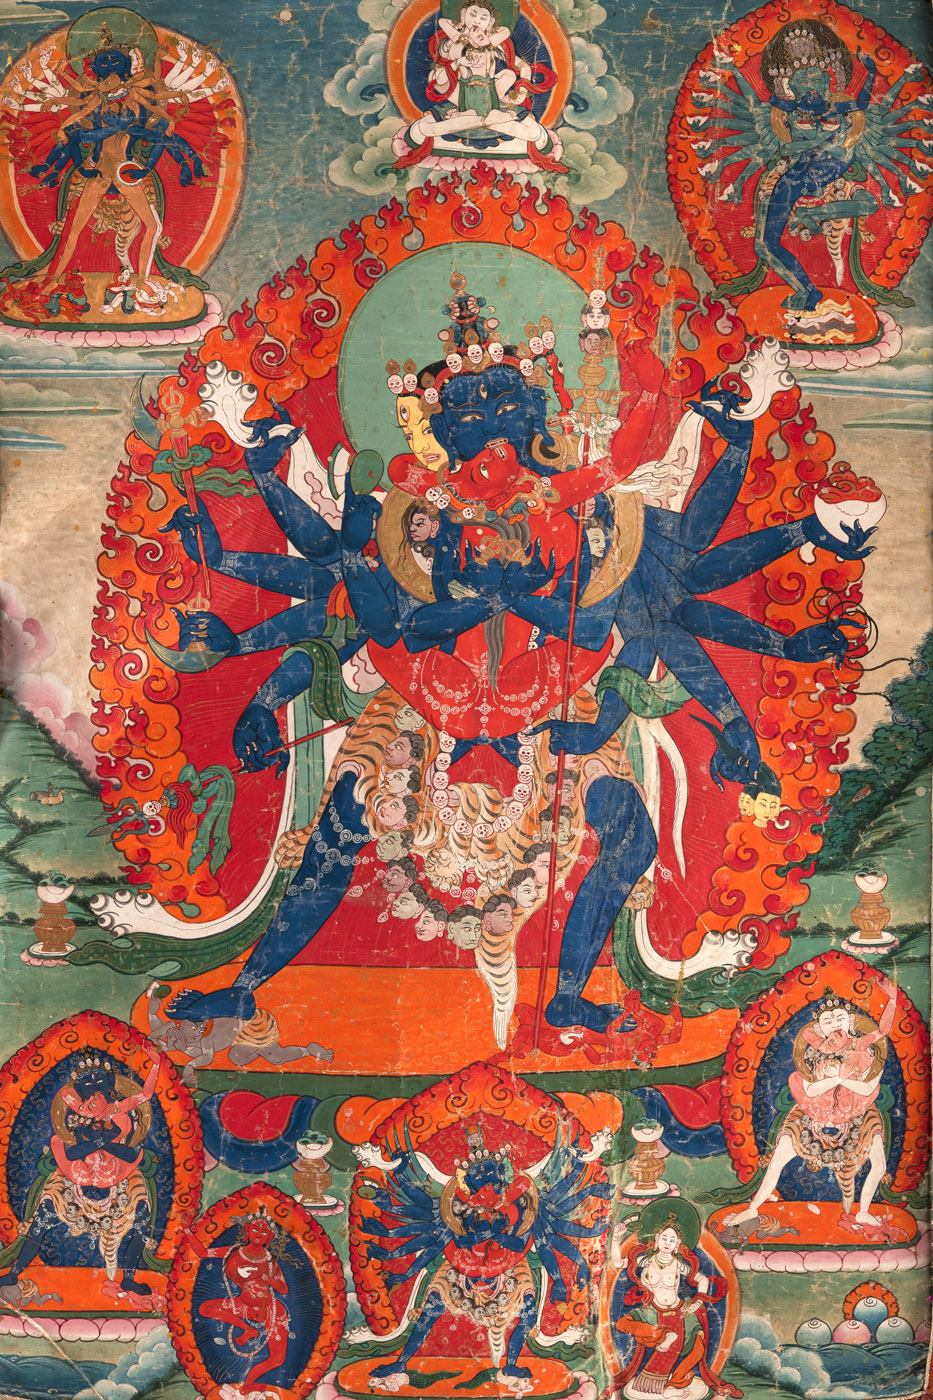 The Yidam Cakrasamvara and other tantric deities